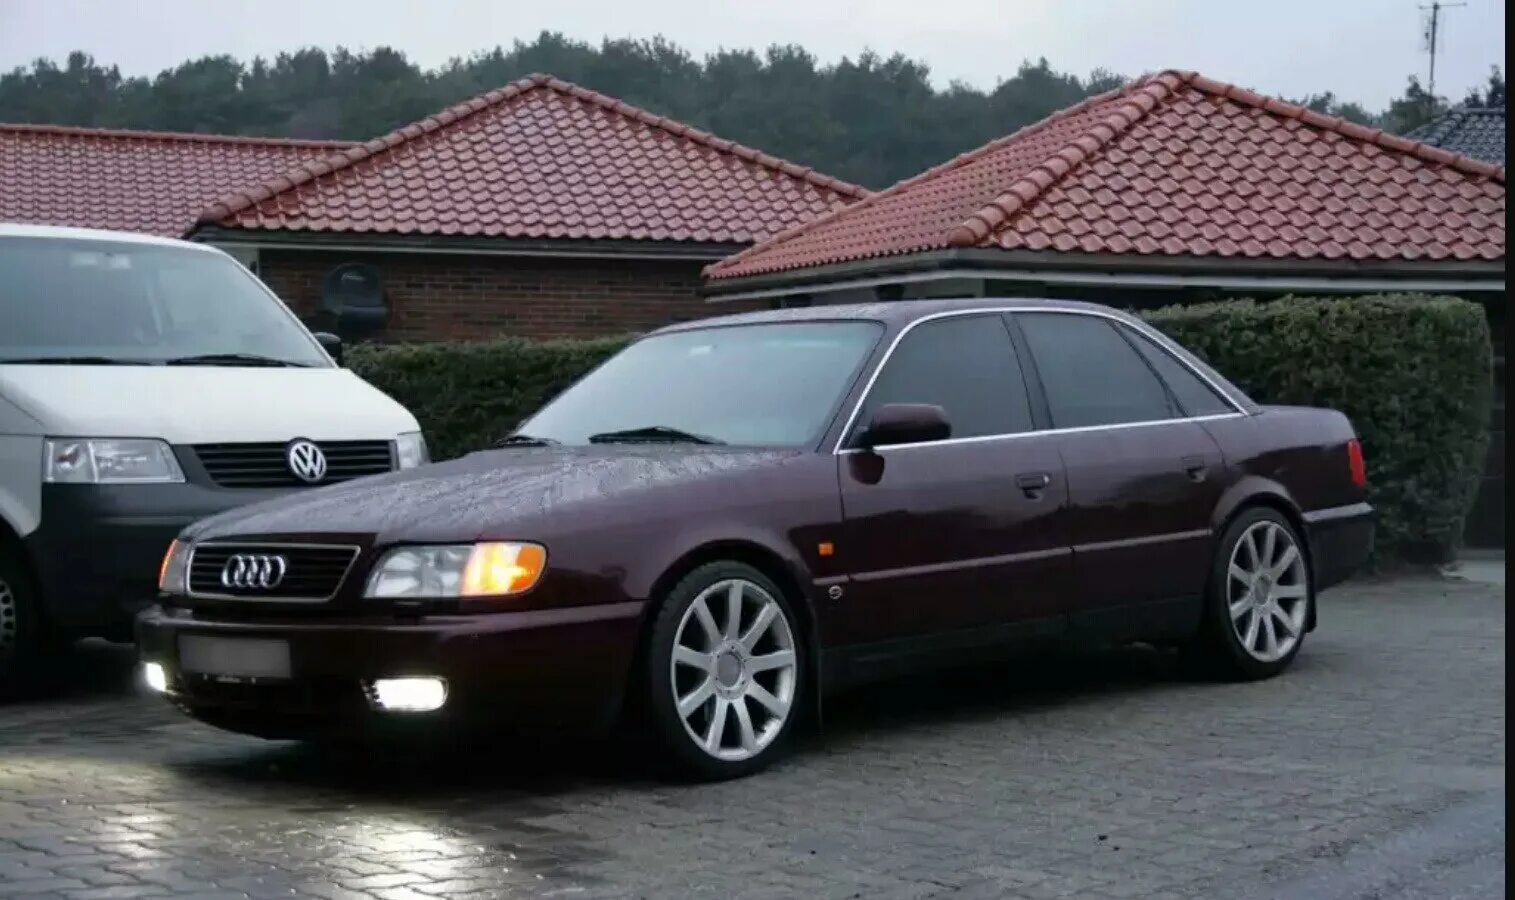 Ауди оцинкованная. Audi a6 c4 1998. Audi a6 c4 кузов. Audi a6 c4, 1994-1997, седан. Audi a6 c4 1996.